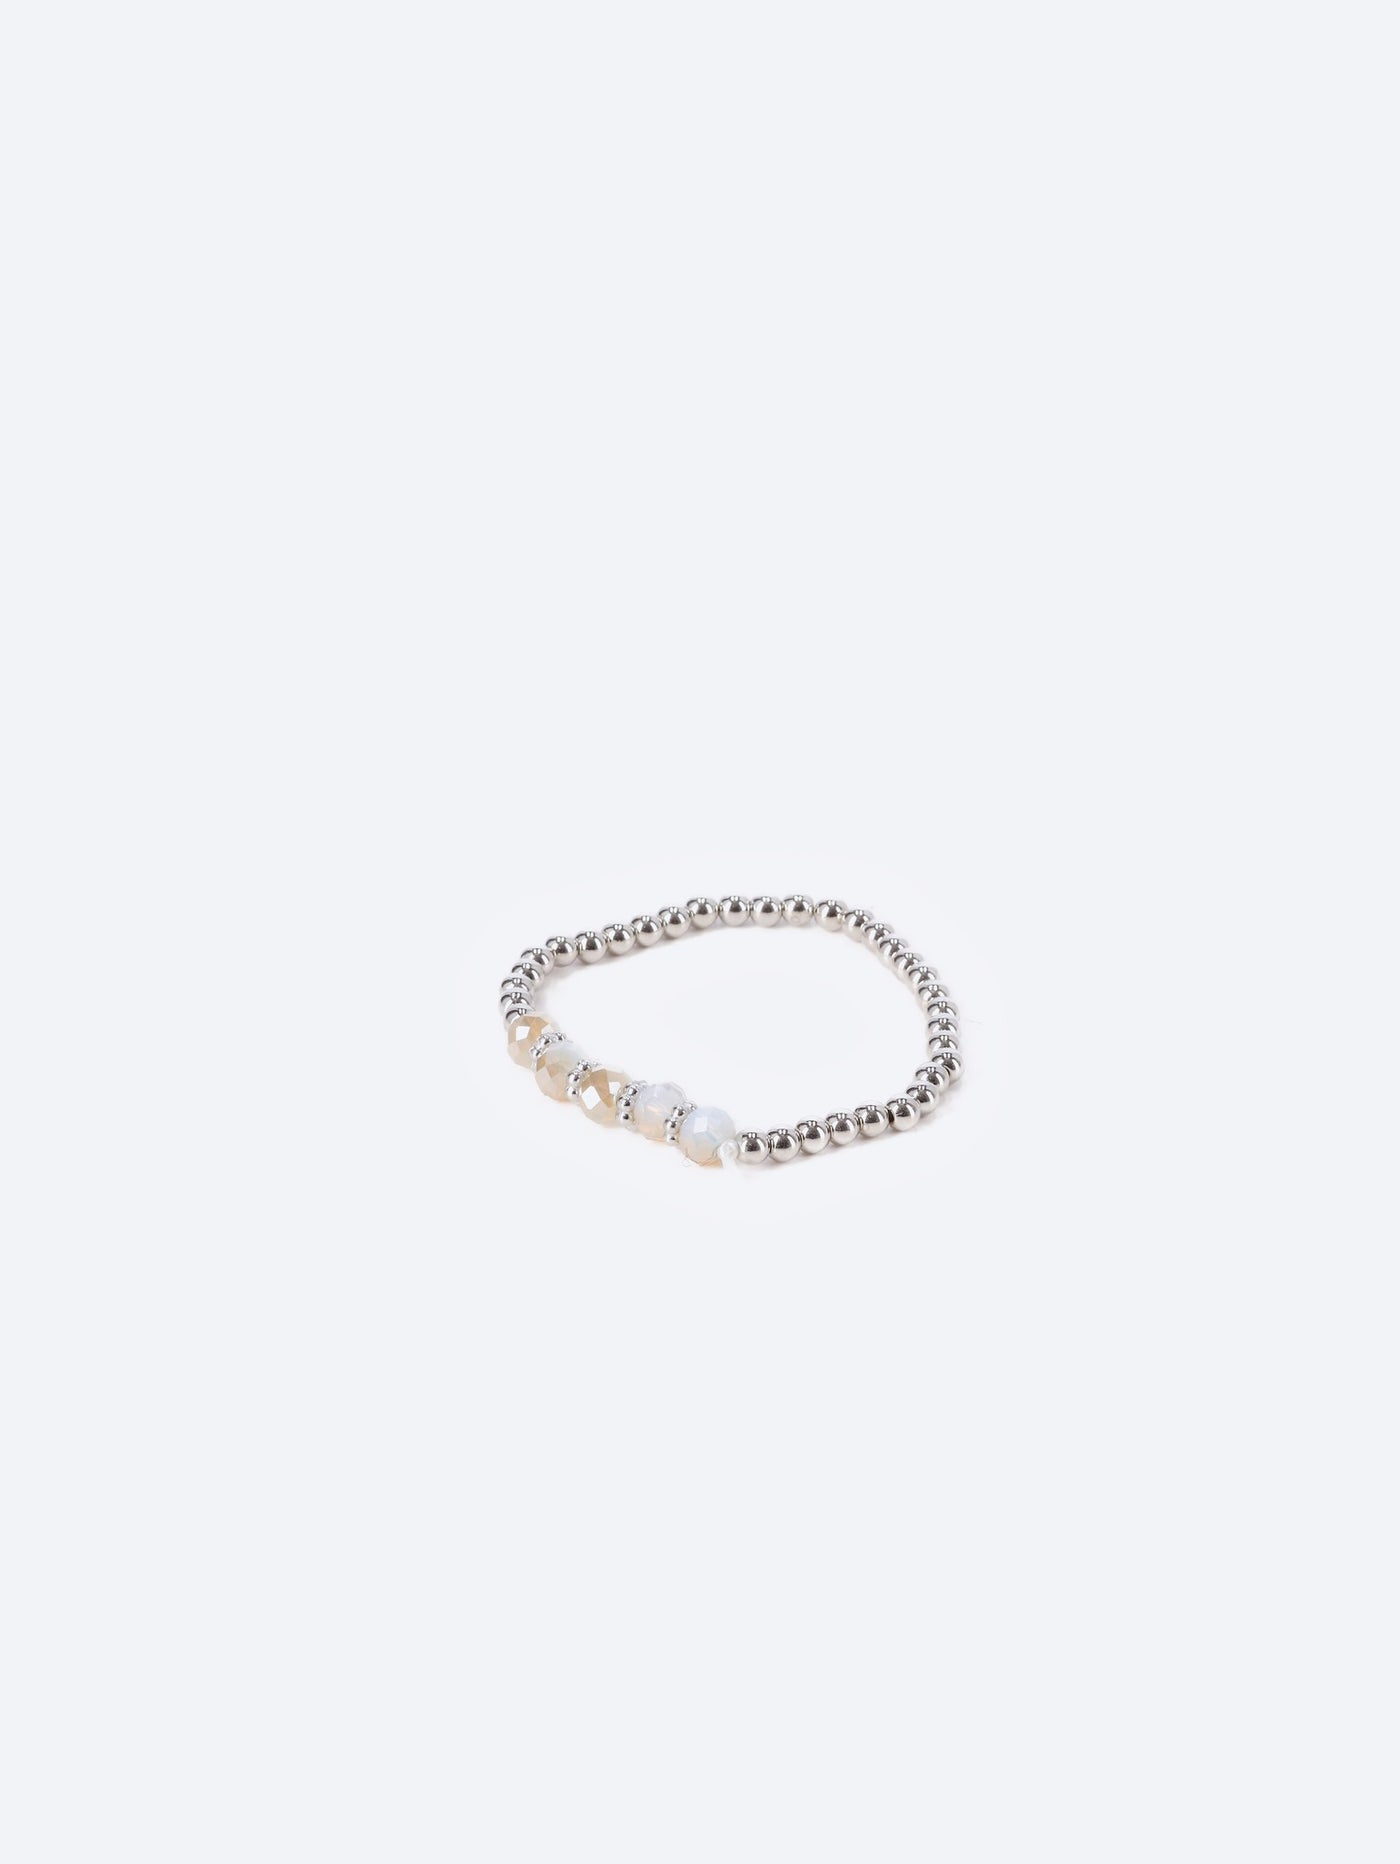 Bracelet Set - Beads & Pearls - 4 Pieces